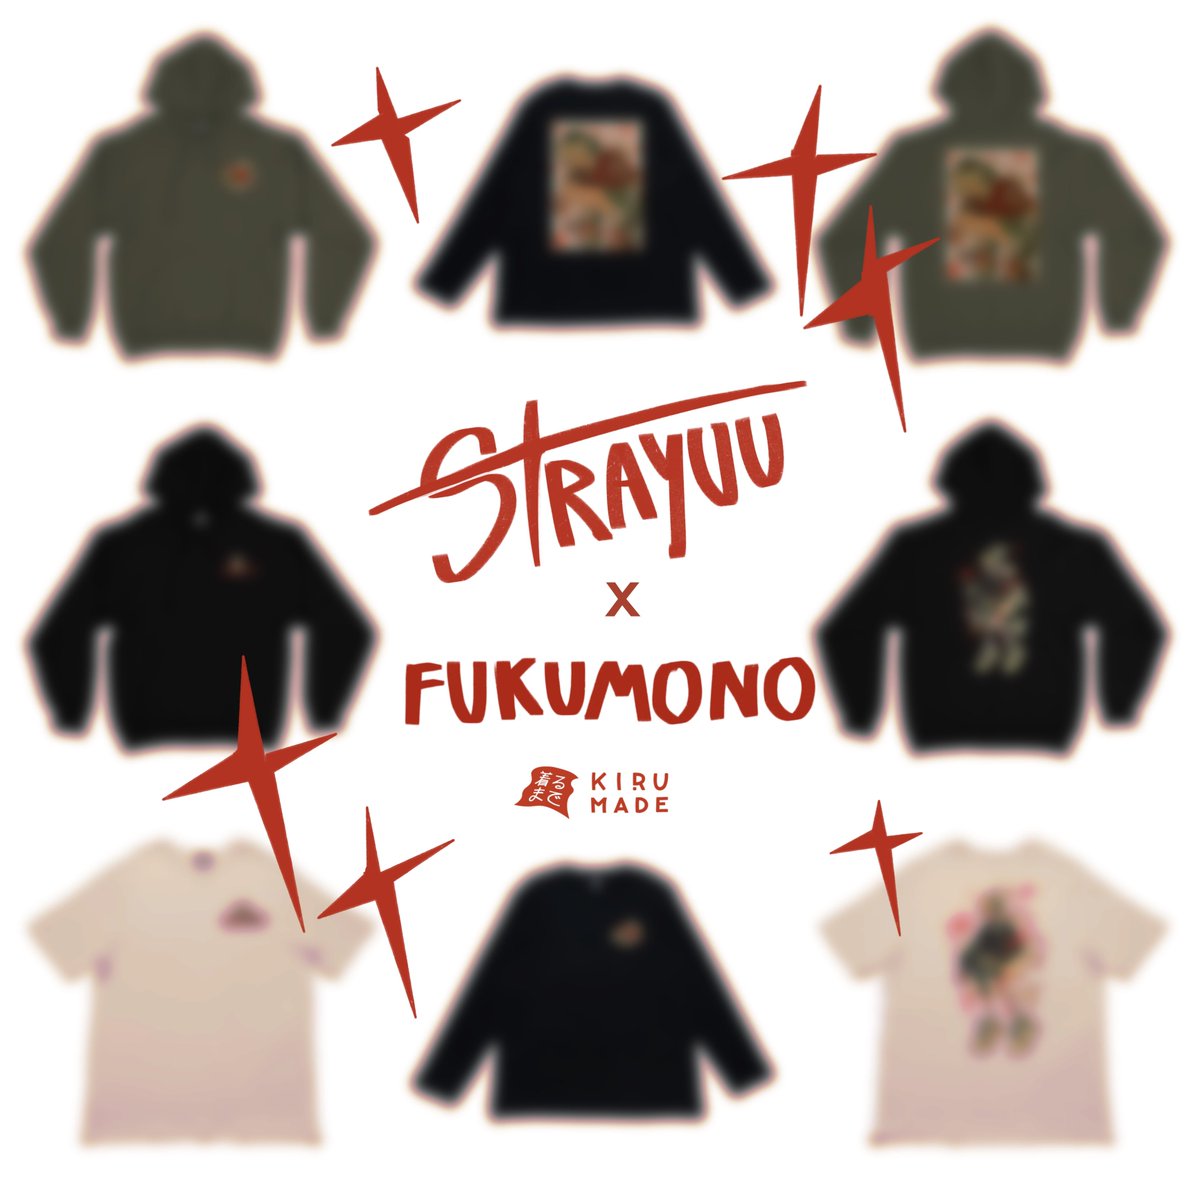 FUKUMONO X STRAYUU
apparel collection drop -> Nov.10 @ 8am utc-8 🍁 